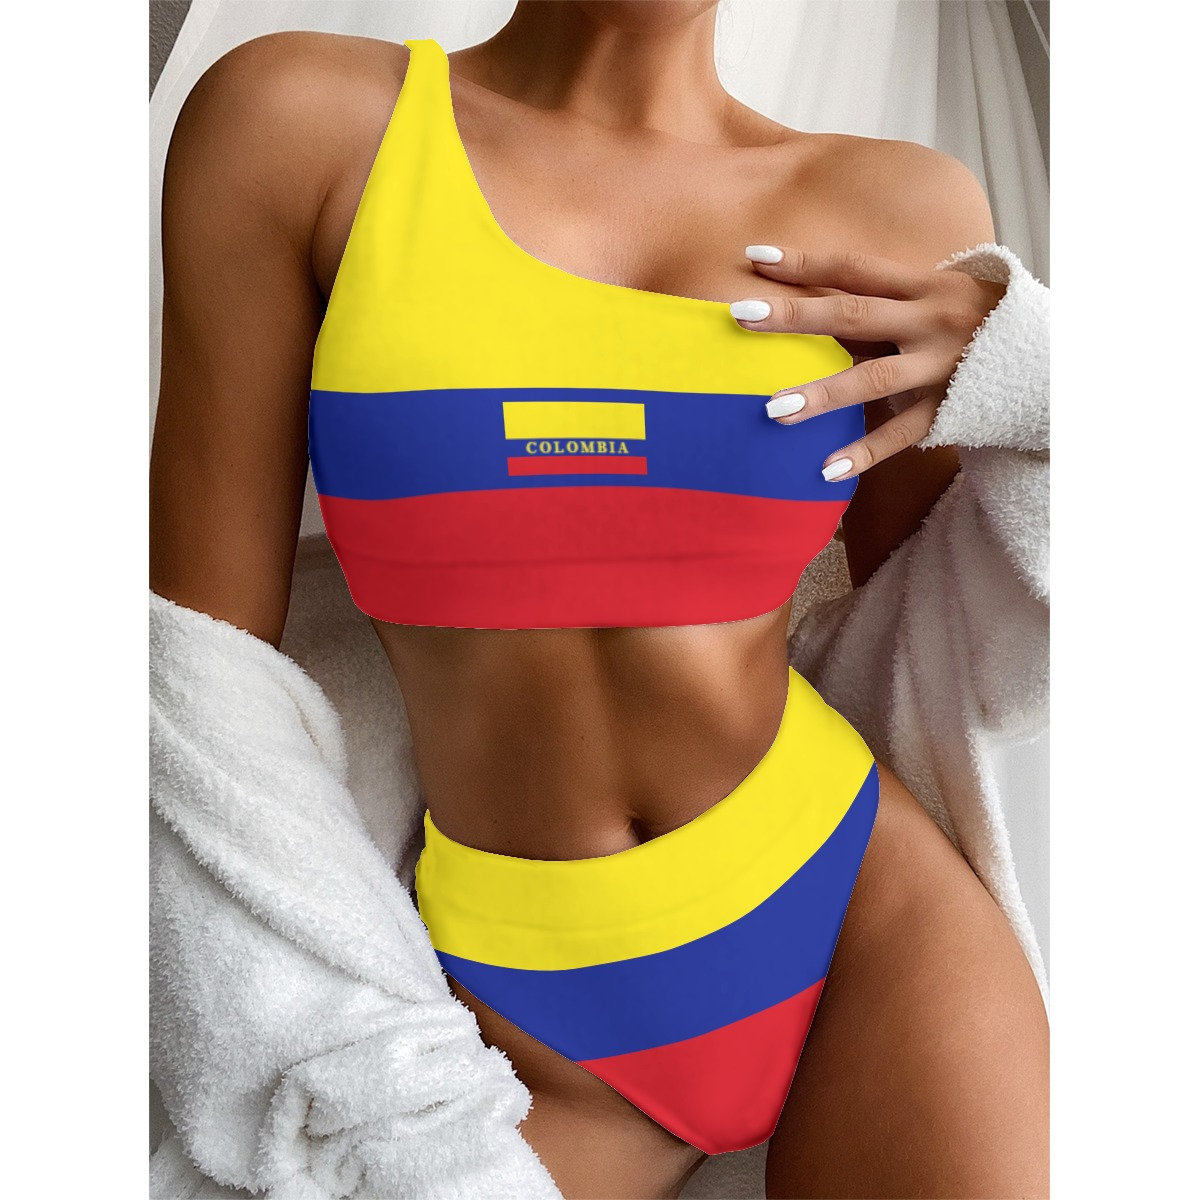 Colombian Women's Swimsuit, Colombia, Flag, Accessories, Women